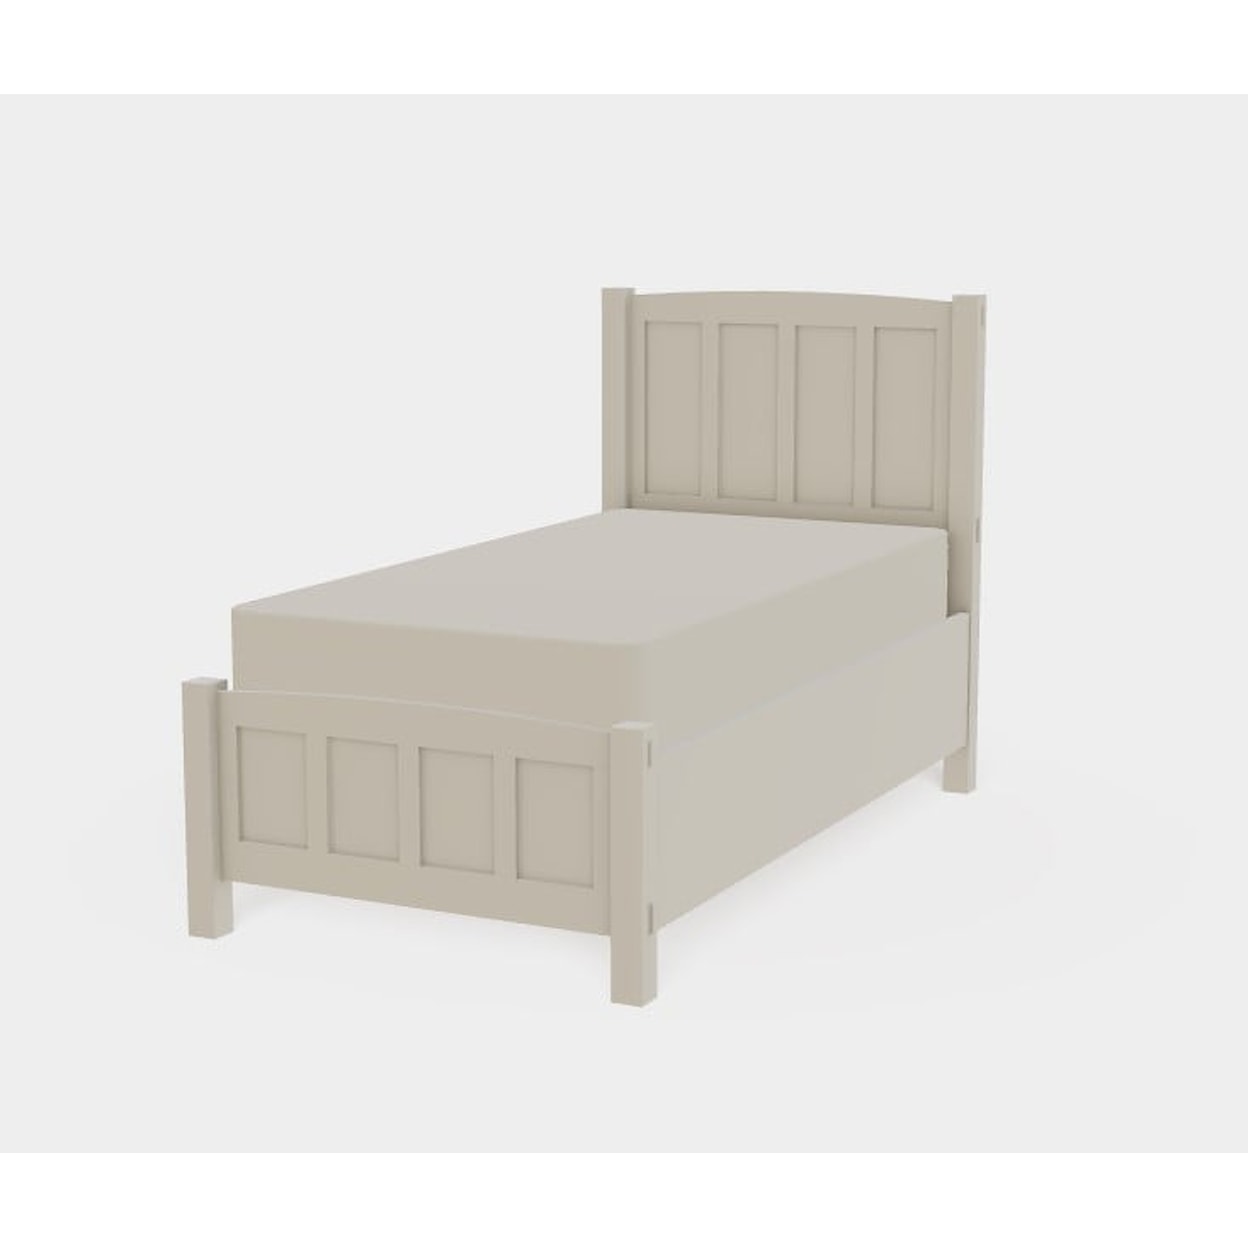 Mavin American Craftsman AMC Twin XL Left Drawerside Panel Bed